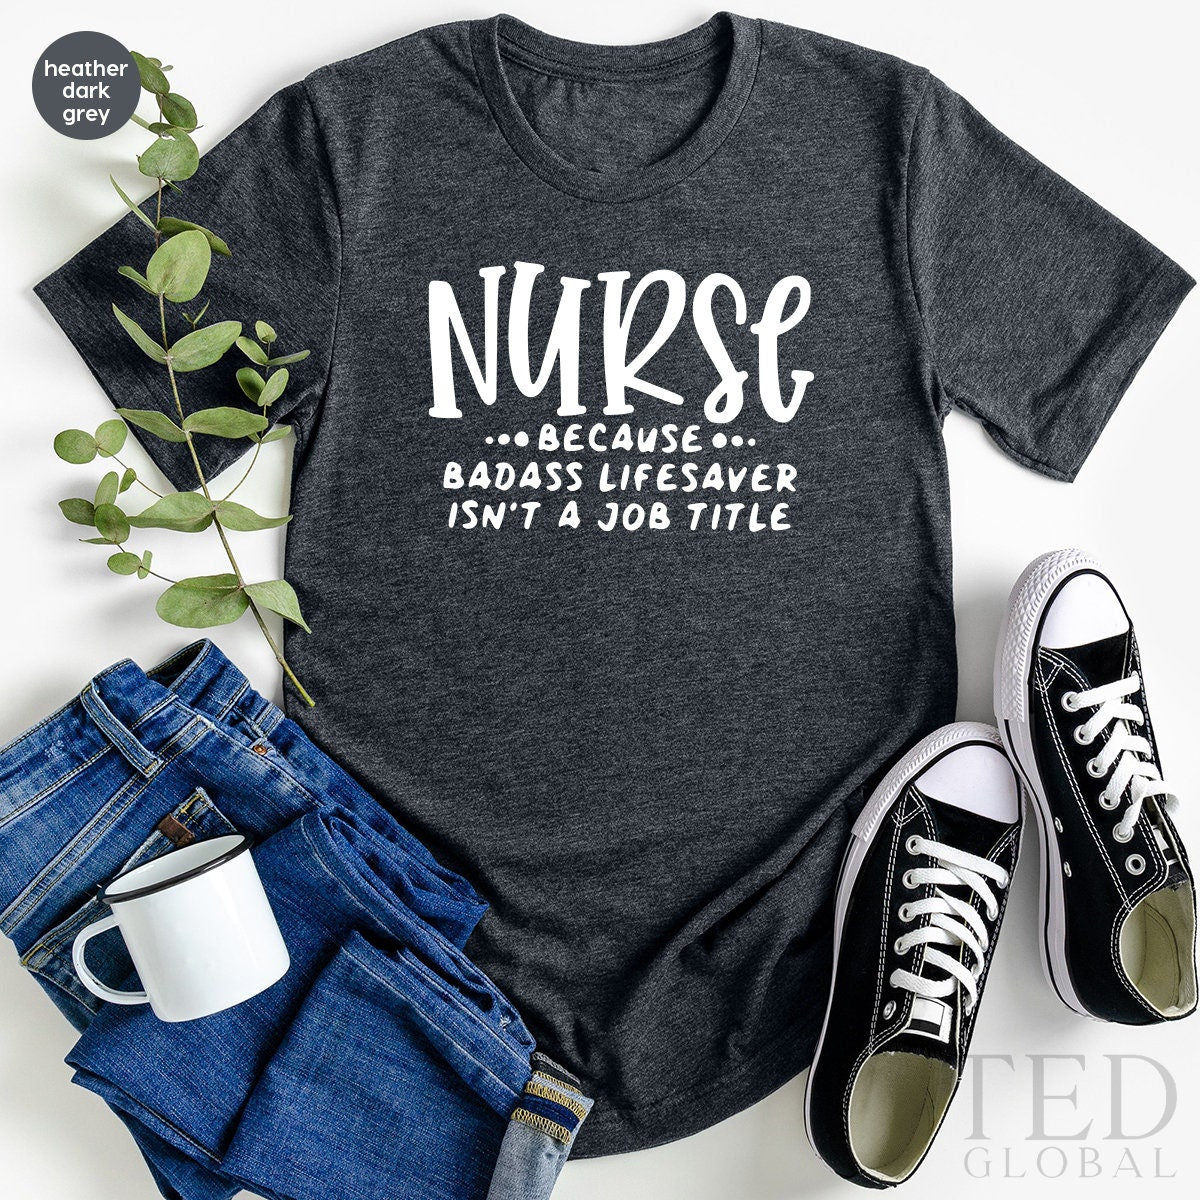 Badass Nurse TShirt, Nursing Shirt, Funny Nurse Shirt, Nursery Gifts, Gift For Nurse Mom, Badass Lifesaver Tee, Nurses Gift, Mom TShirt - Fastdeliverytees.com